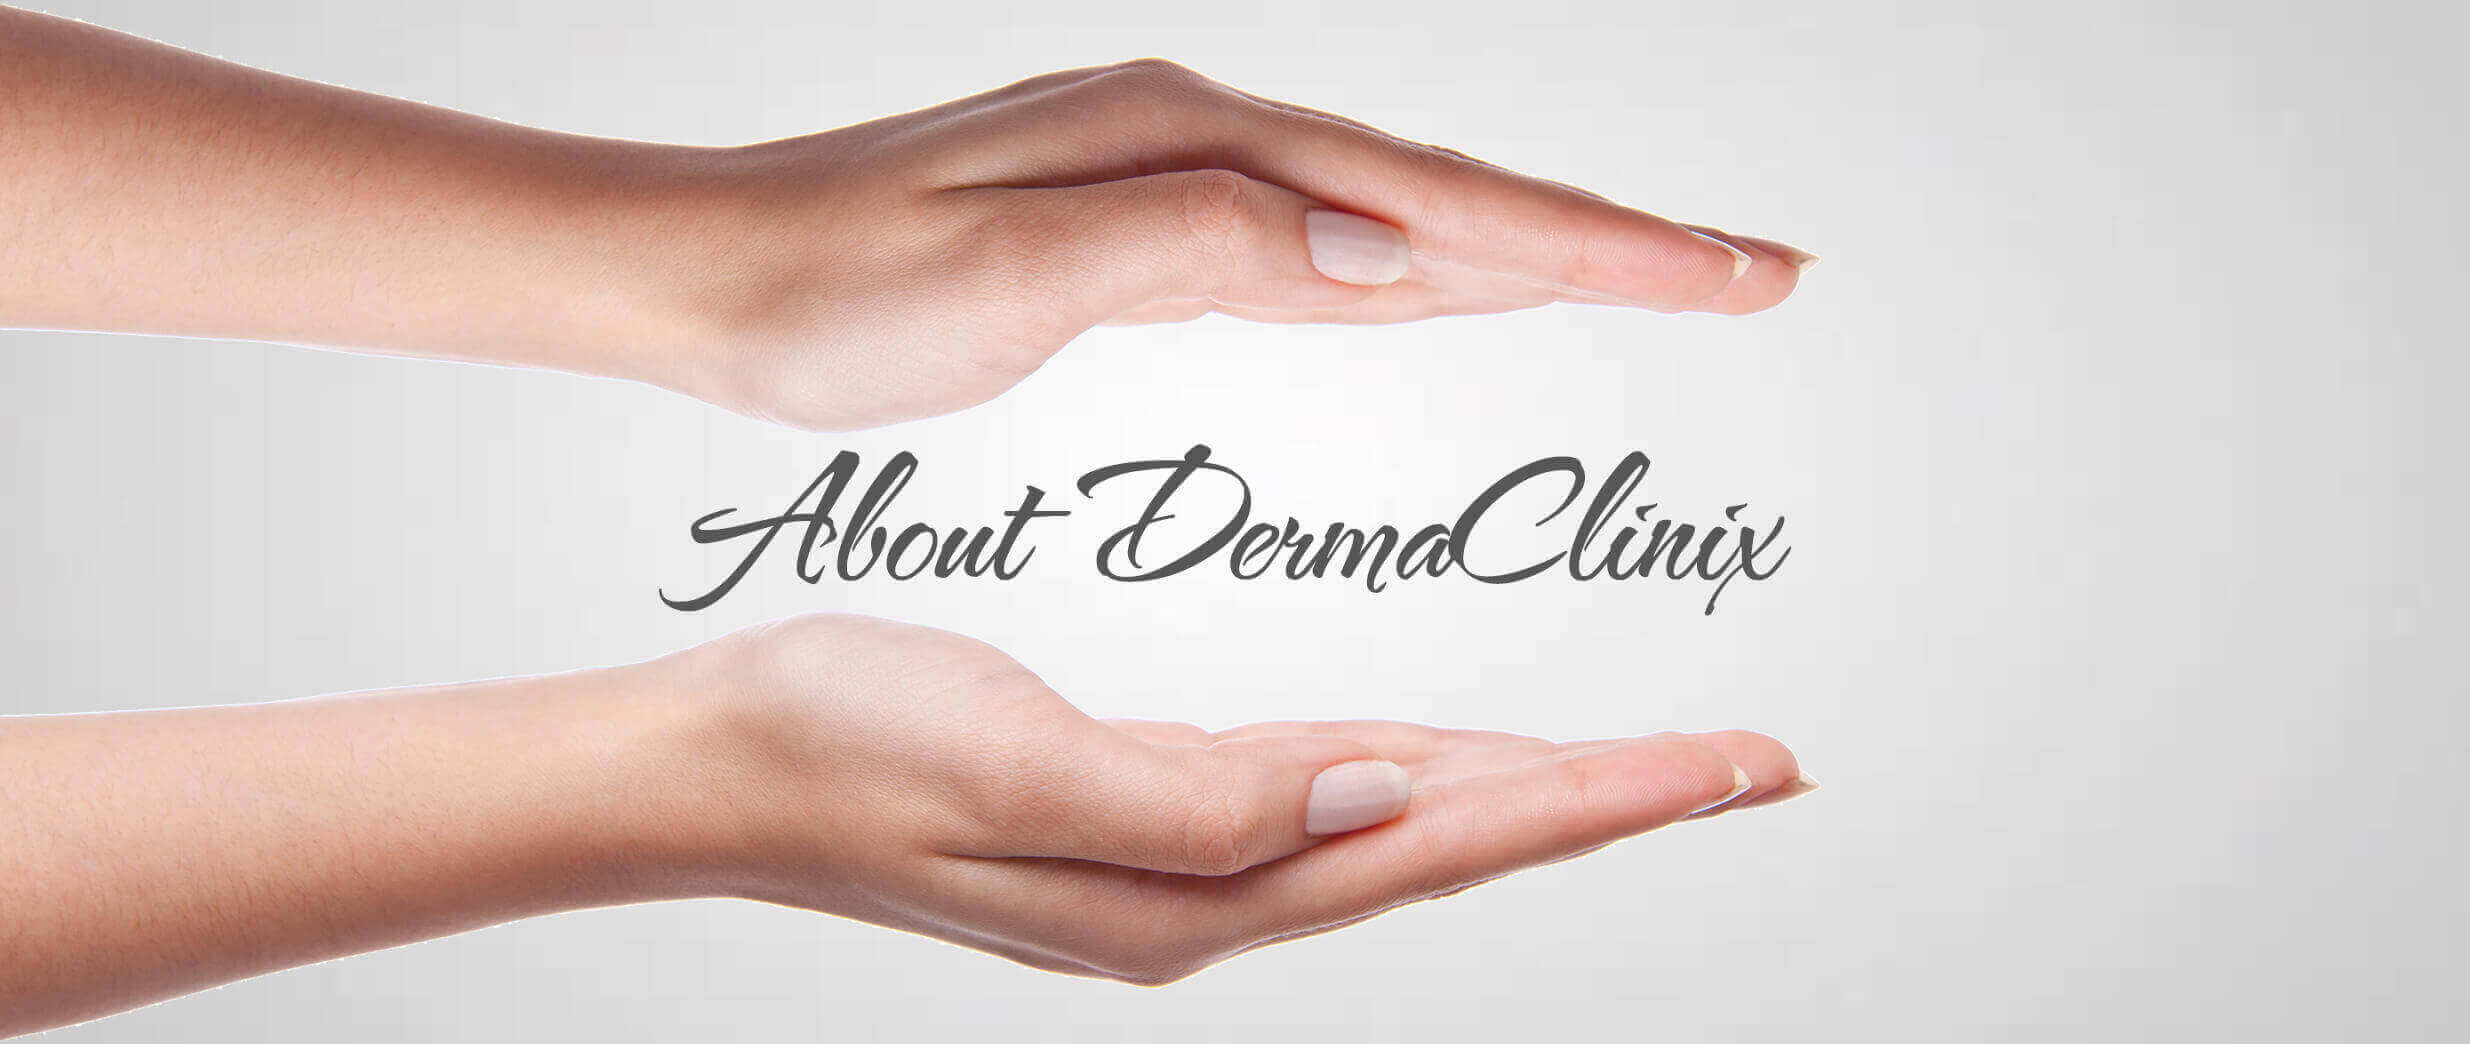 DermaClinix-The Complete Skin & Hair Solution Center